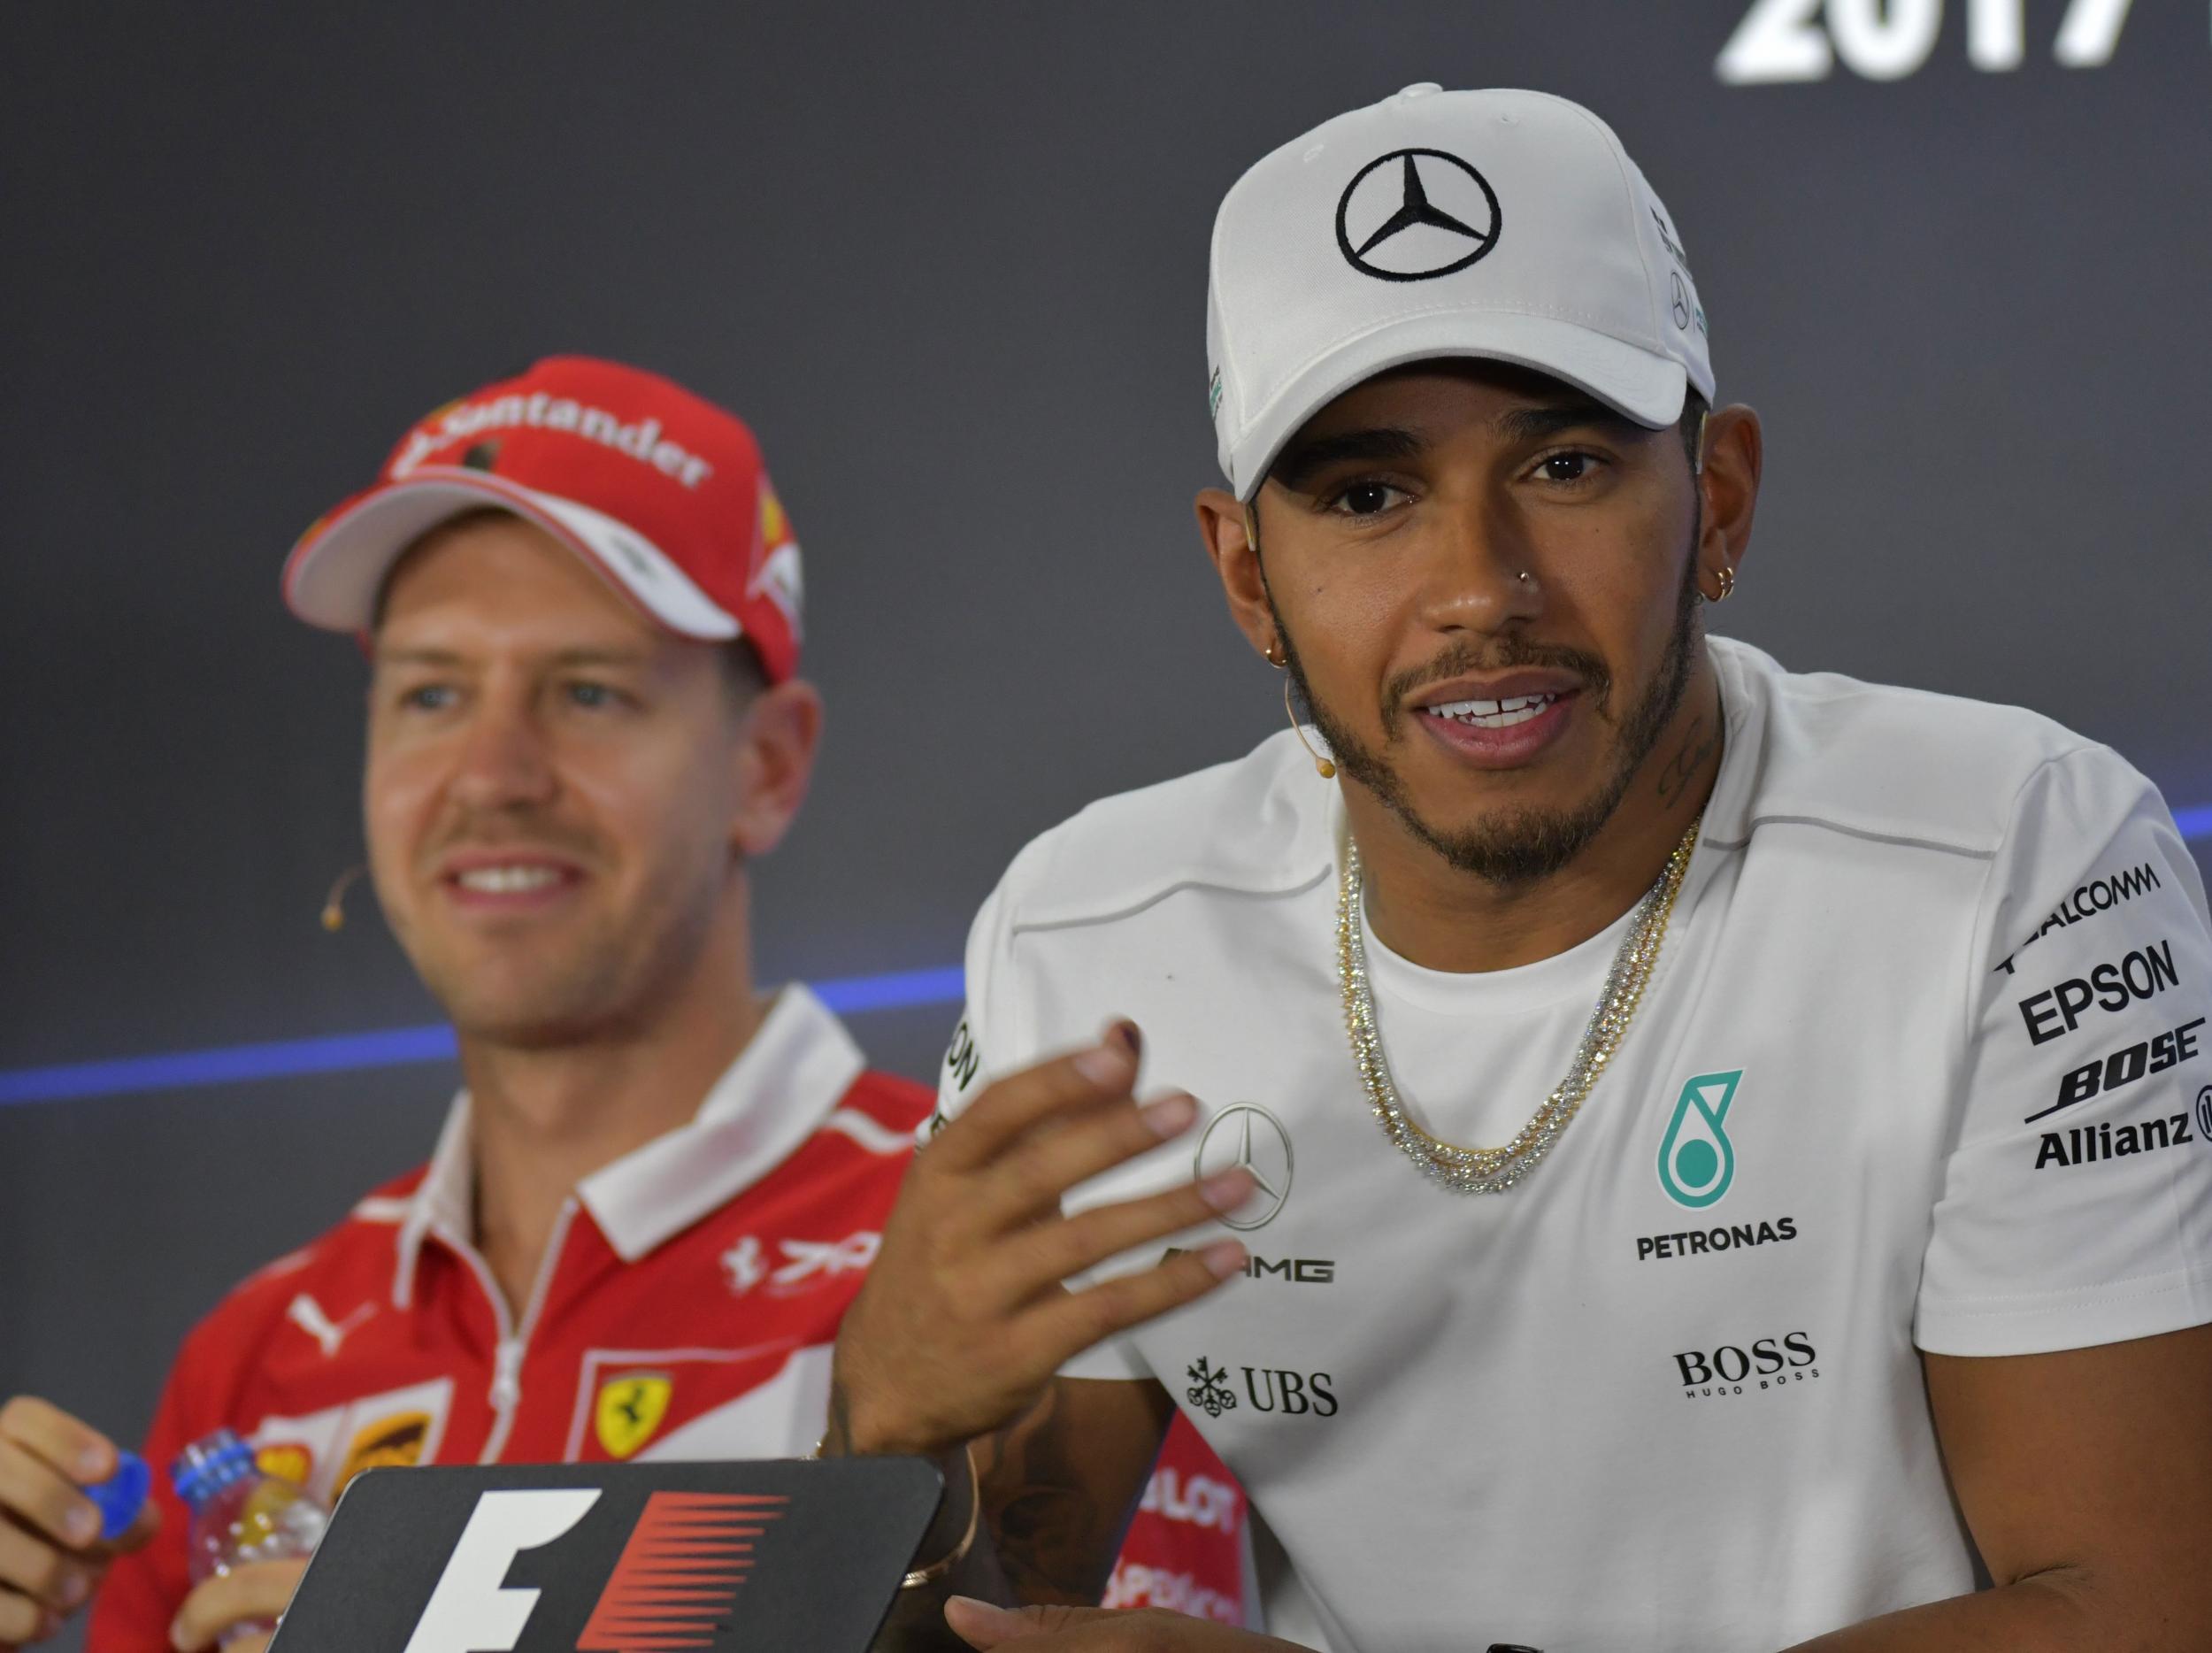 Lewis Hamilton and Sebastian Vettel already have one eye on 2018